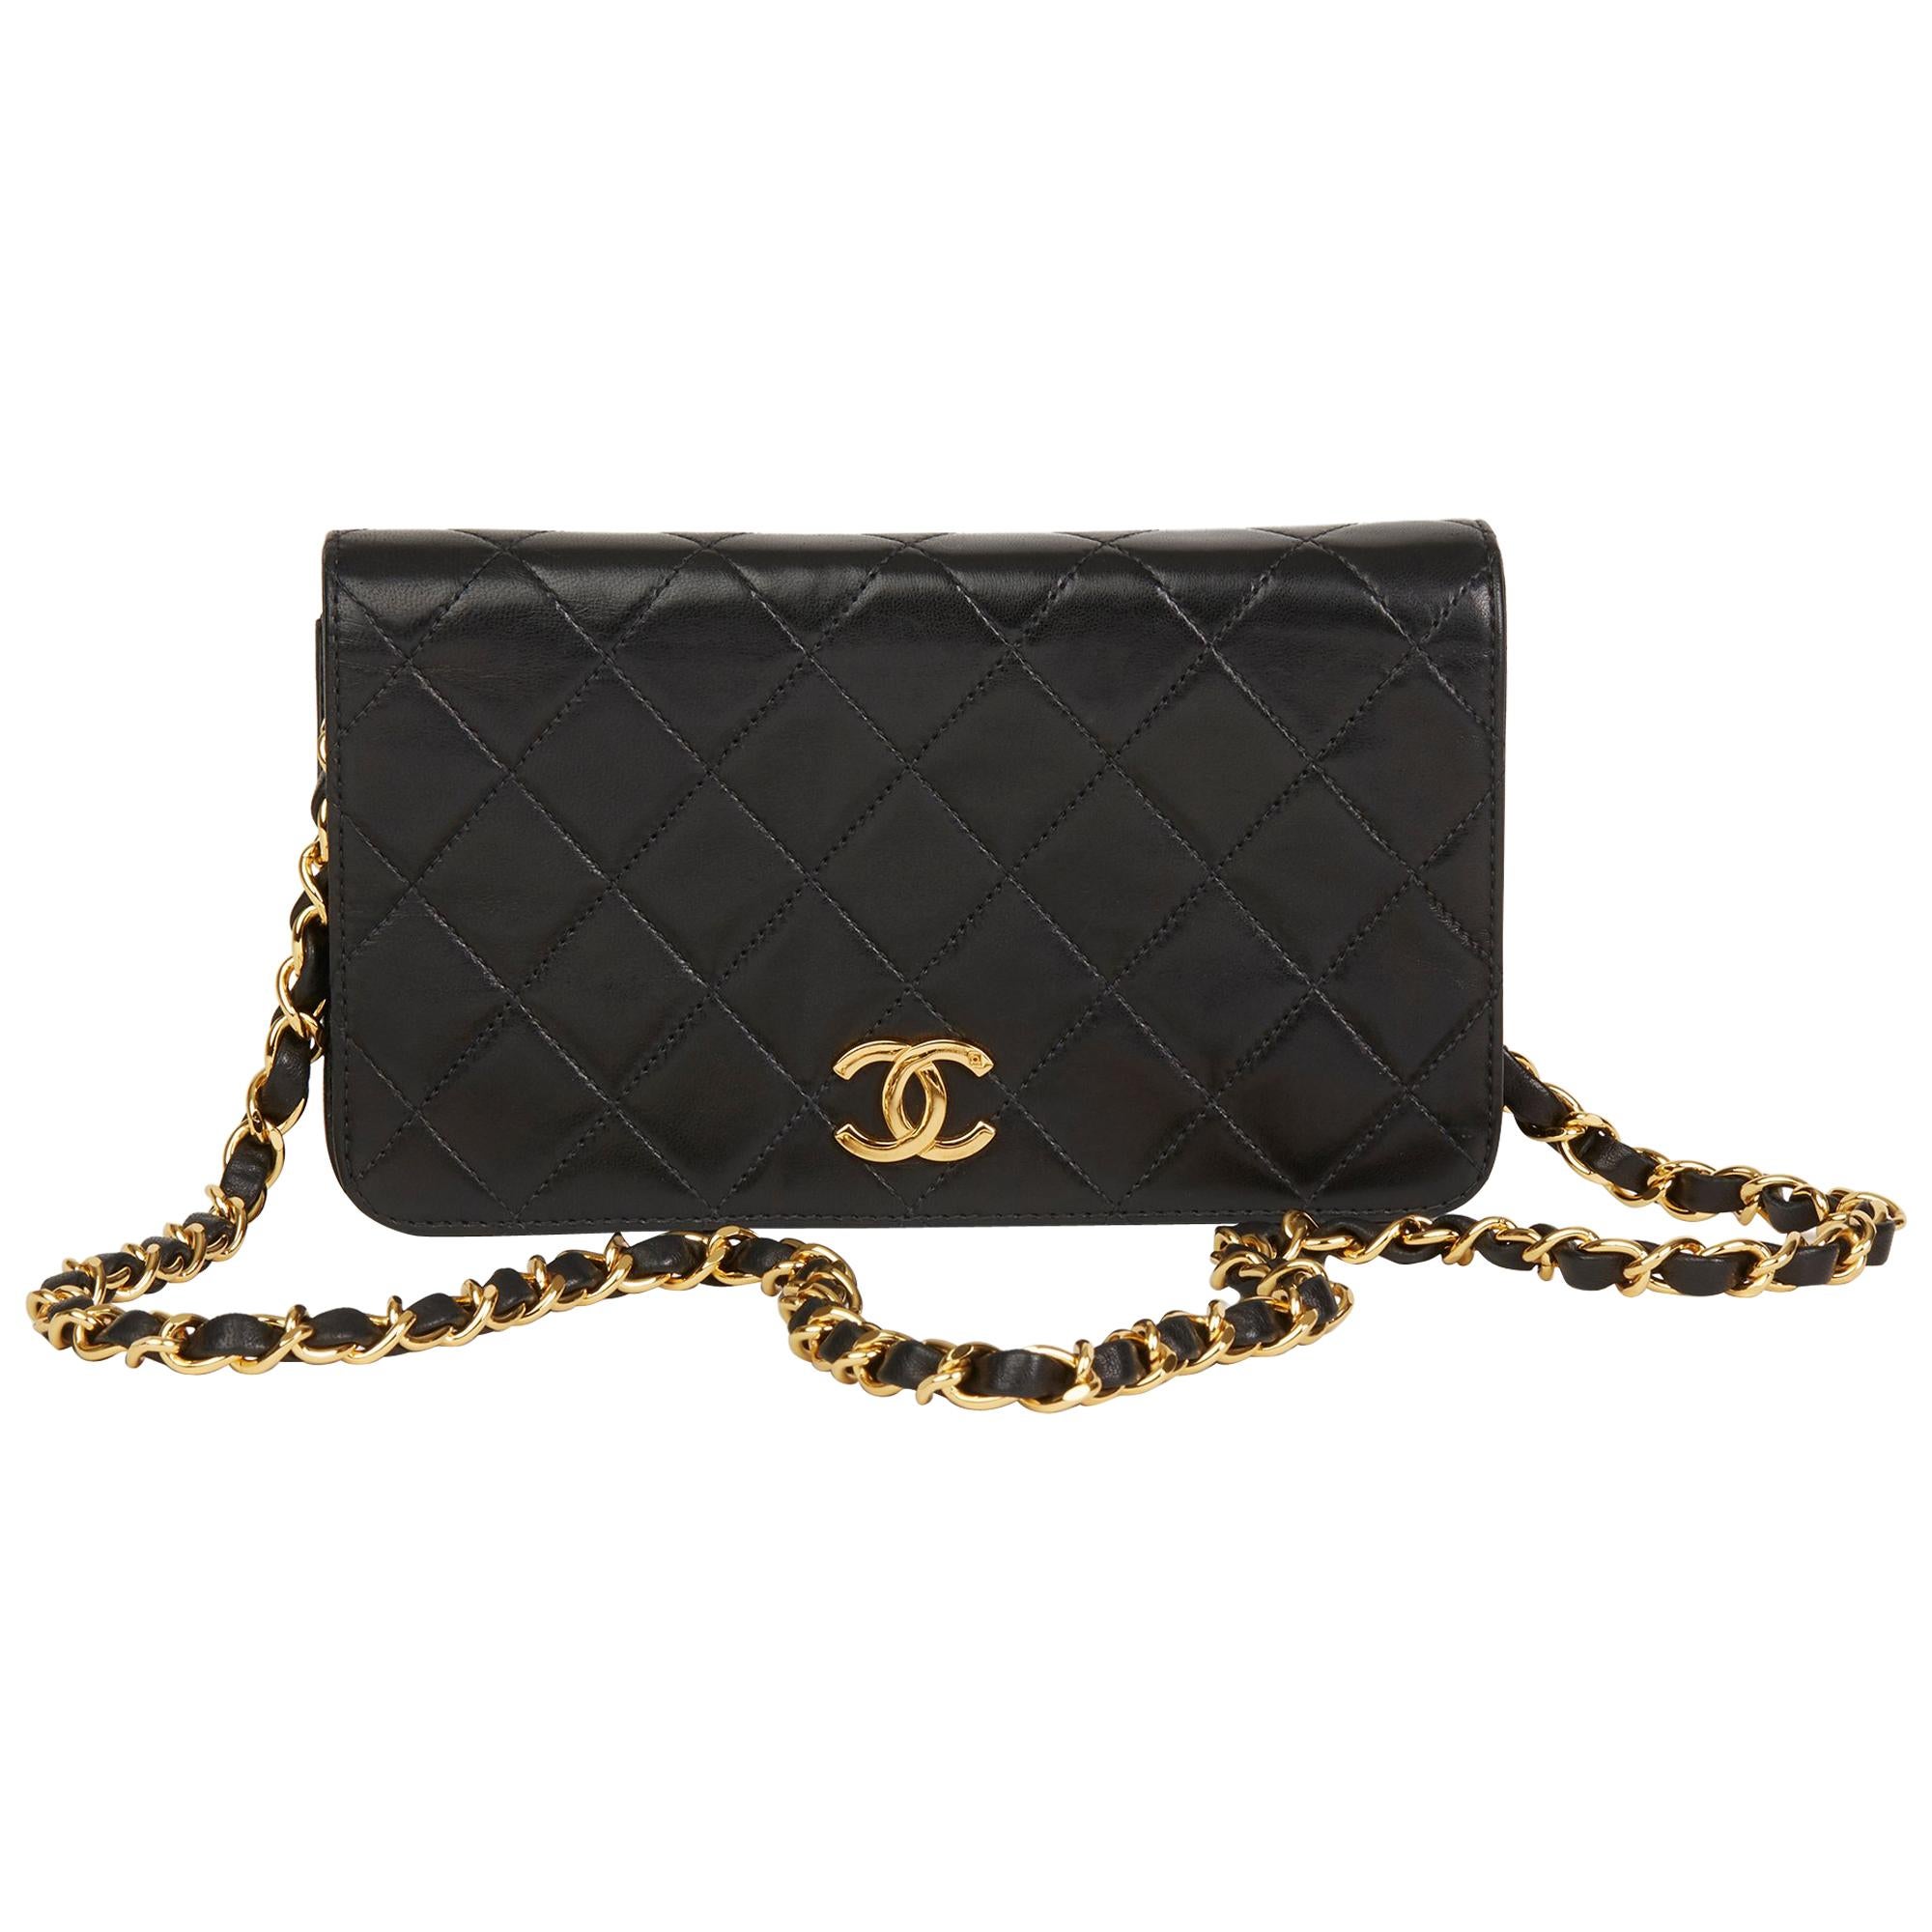 1996 Chanel schwarz gesteppte Lammfell Vintage kleine klassische Full Flap Bag